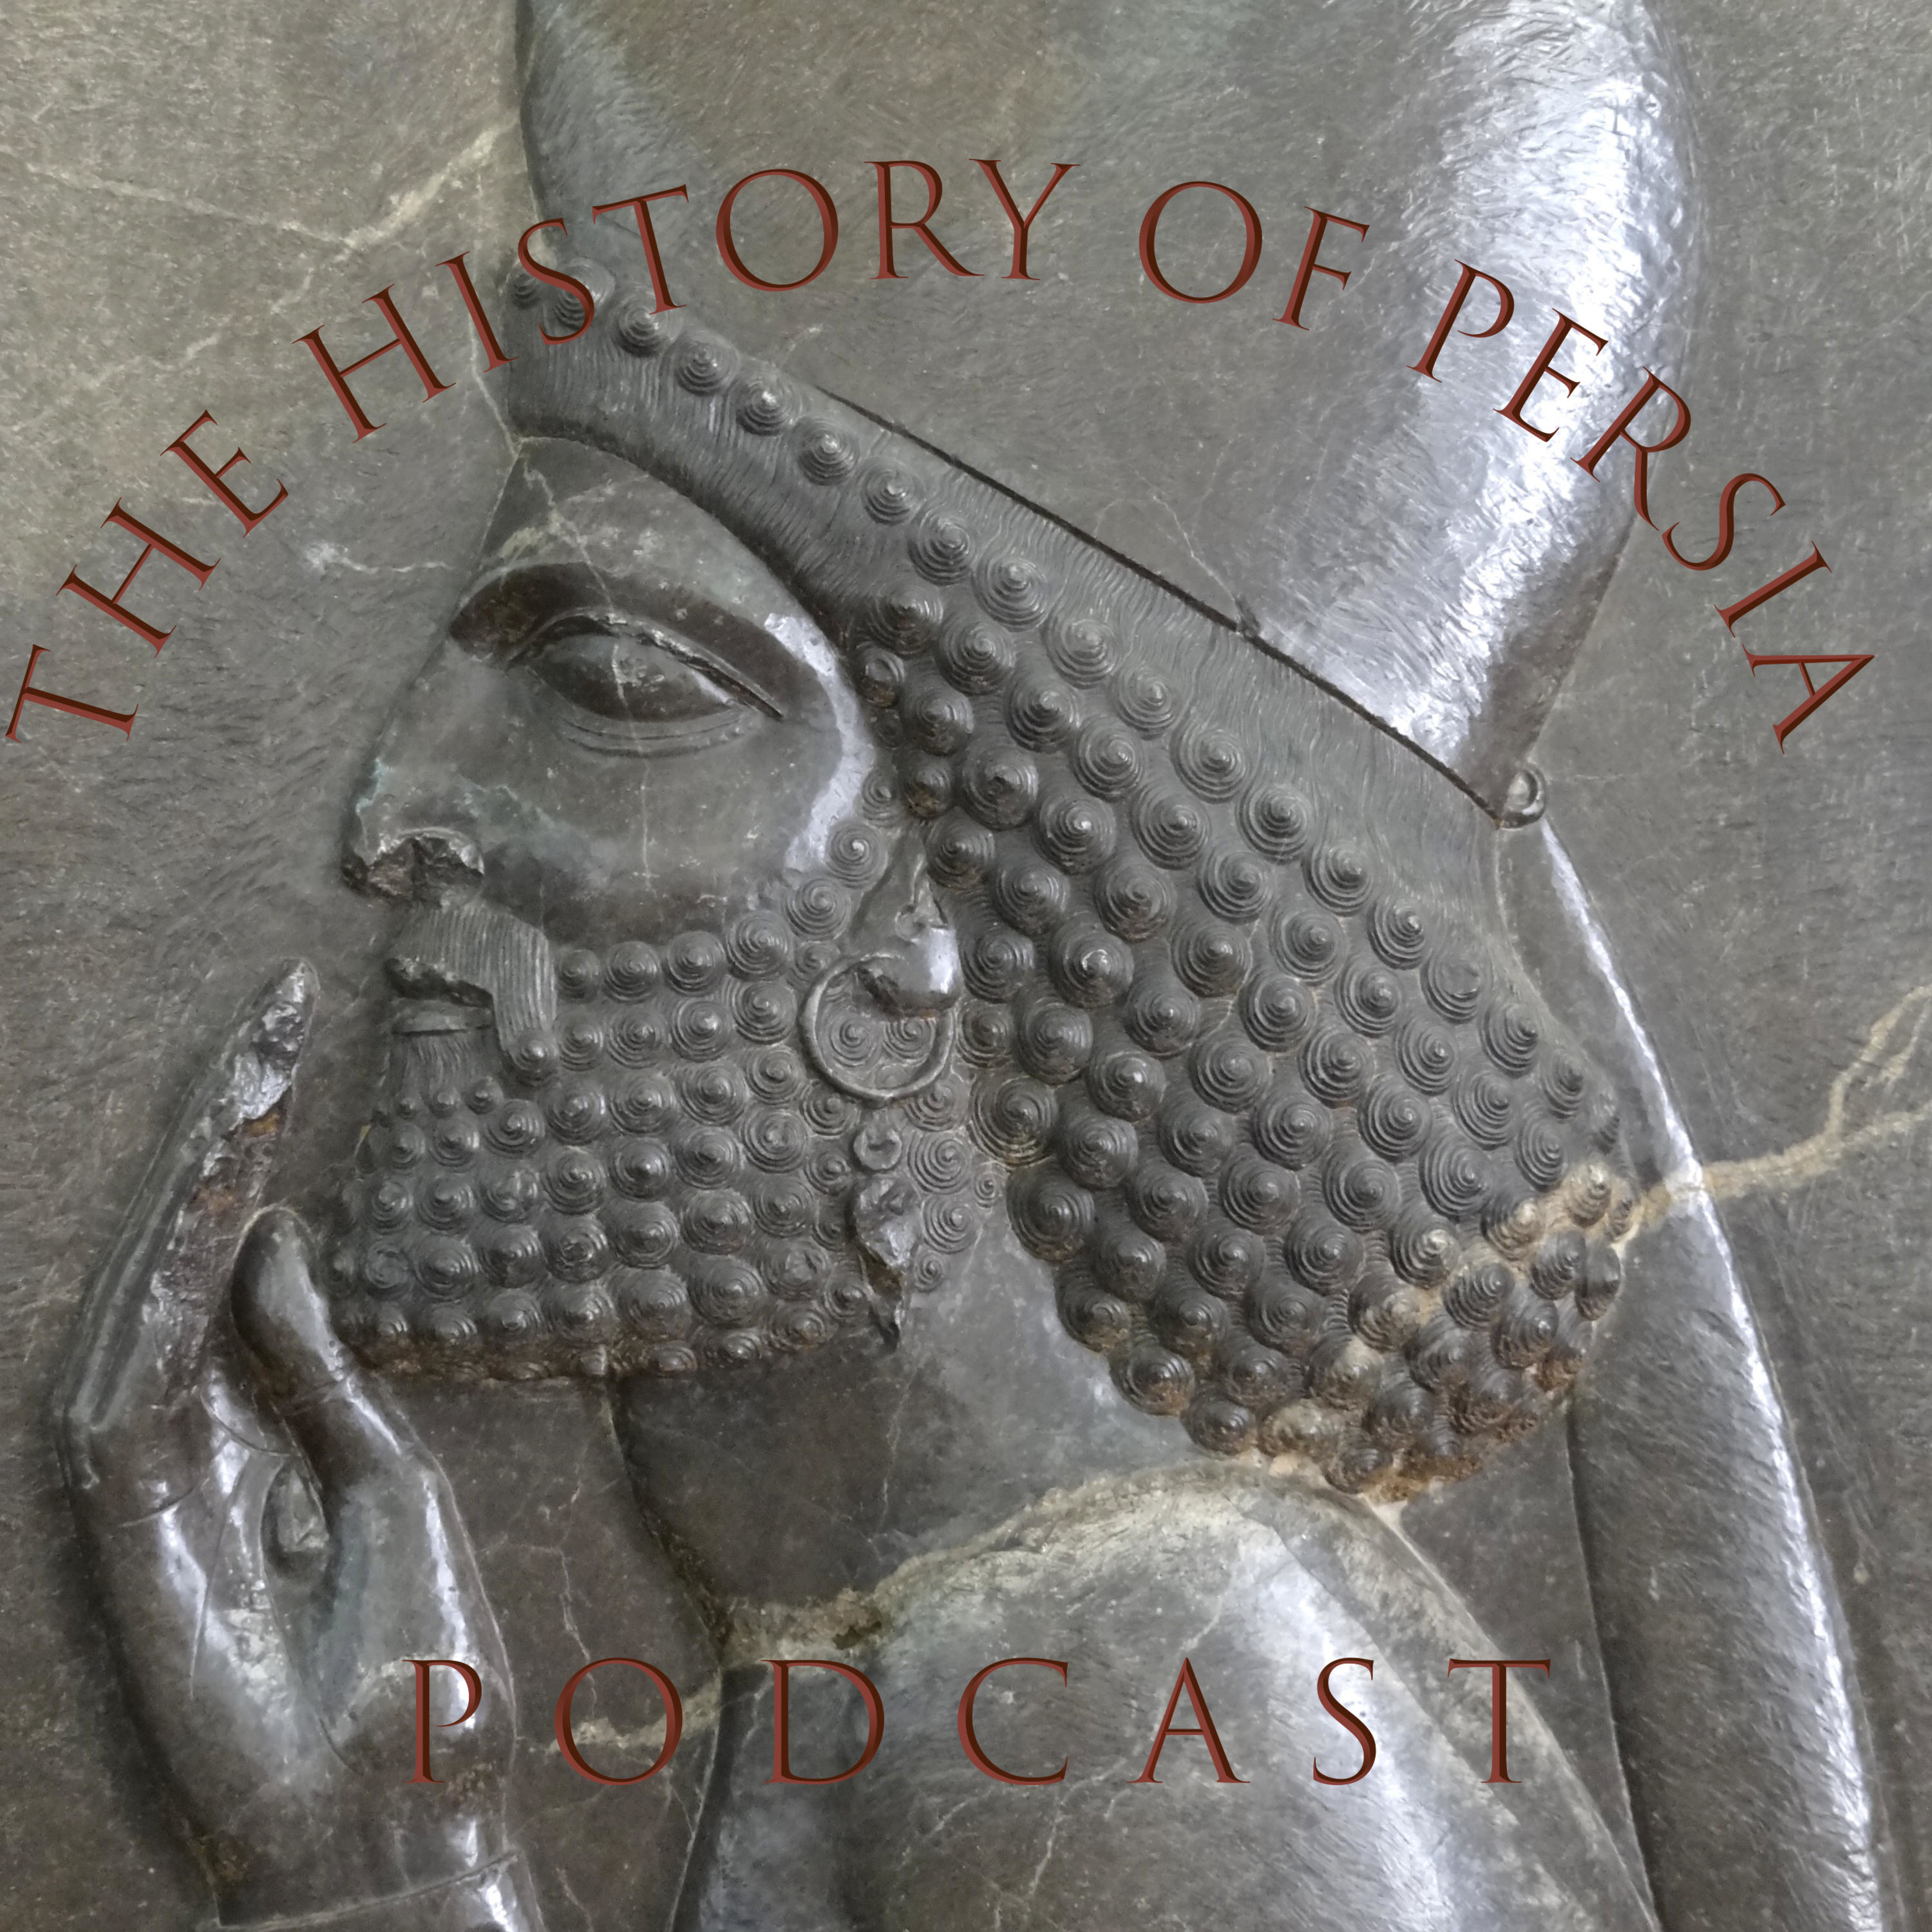 Episode 33: Revenge of the Persians